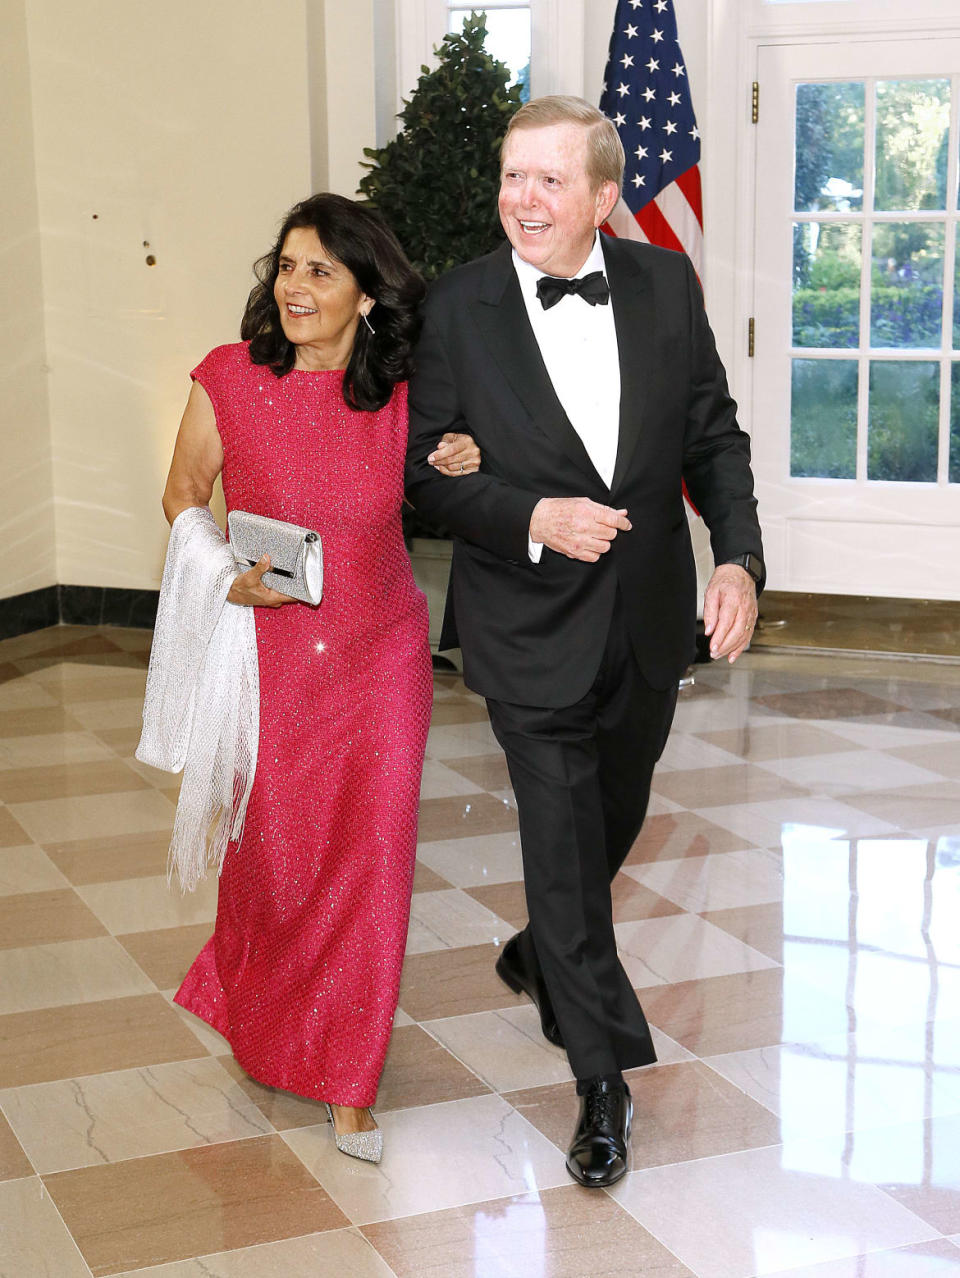 Television presenter Lou Dobbs (R) and Debi Segura arrive for the State Dinner at The White House honoring Australian PM Morrison on September 20, 2019 in Washington, DC.